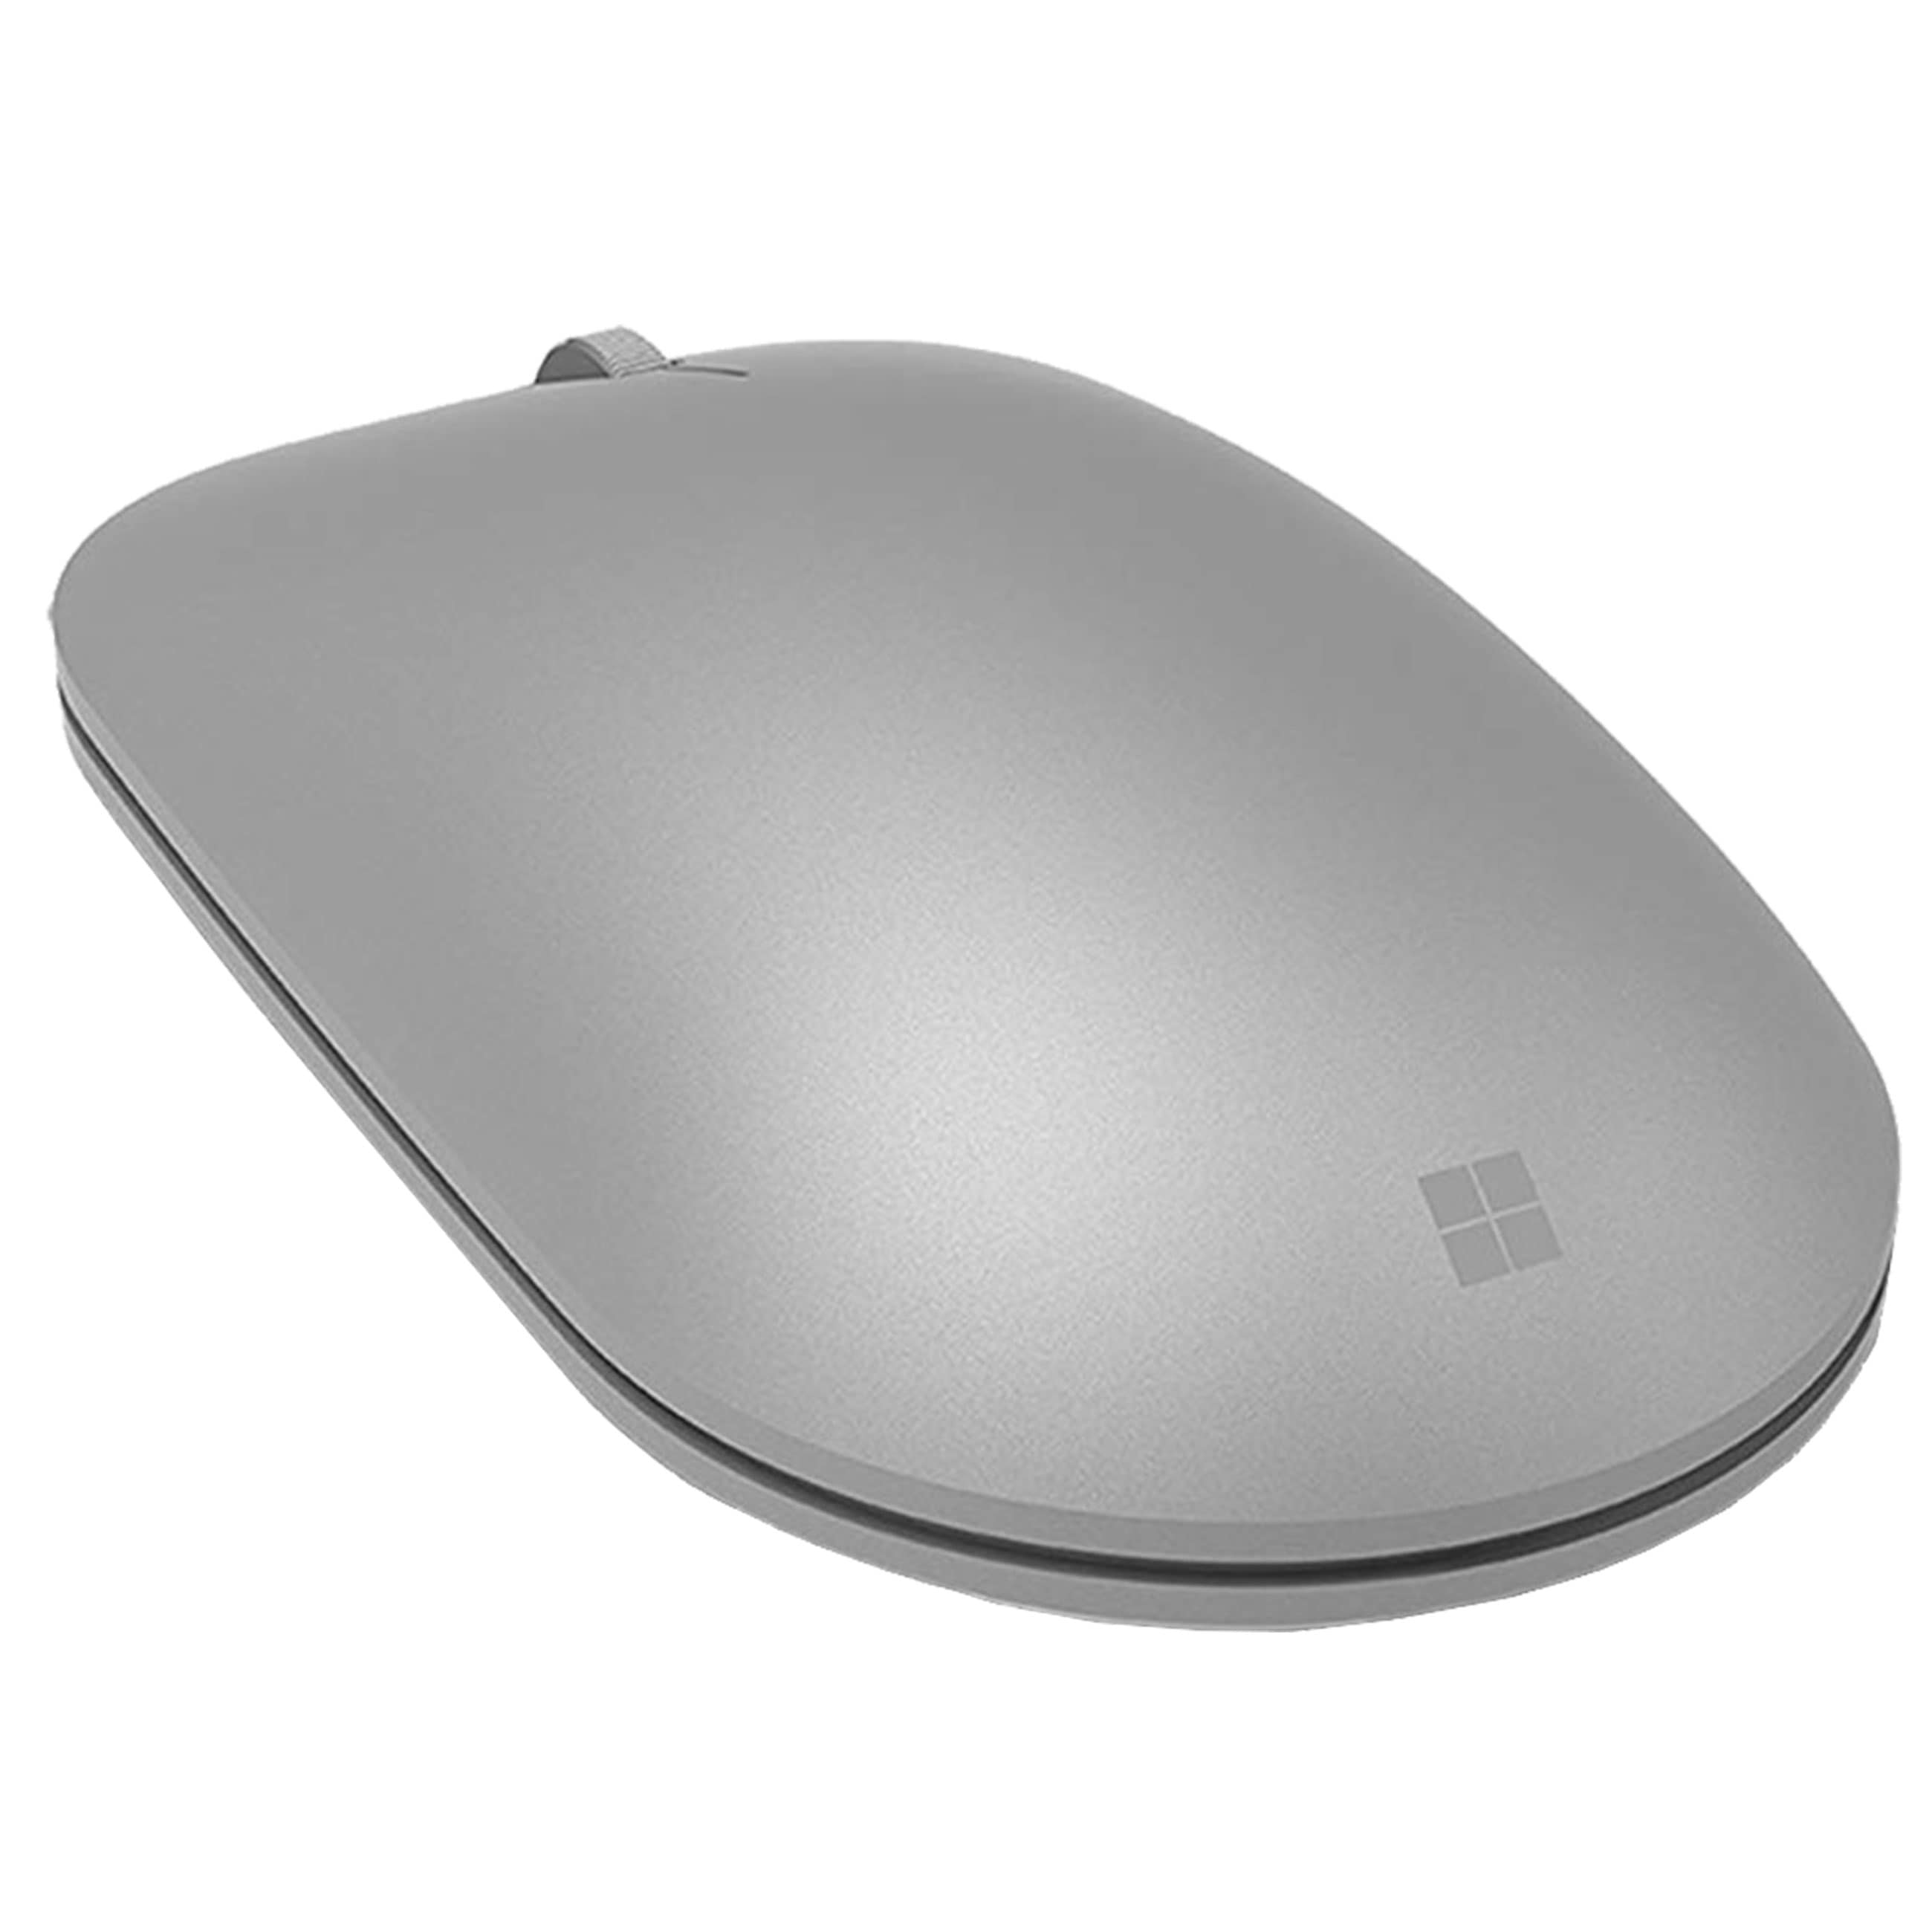 Microsoft Surface Maus - Silber